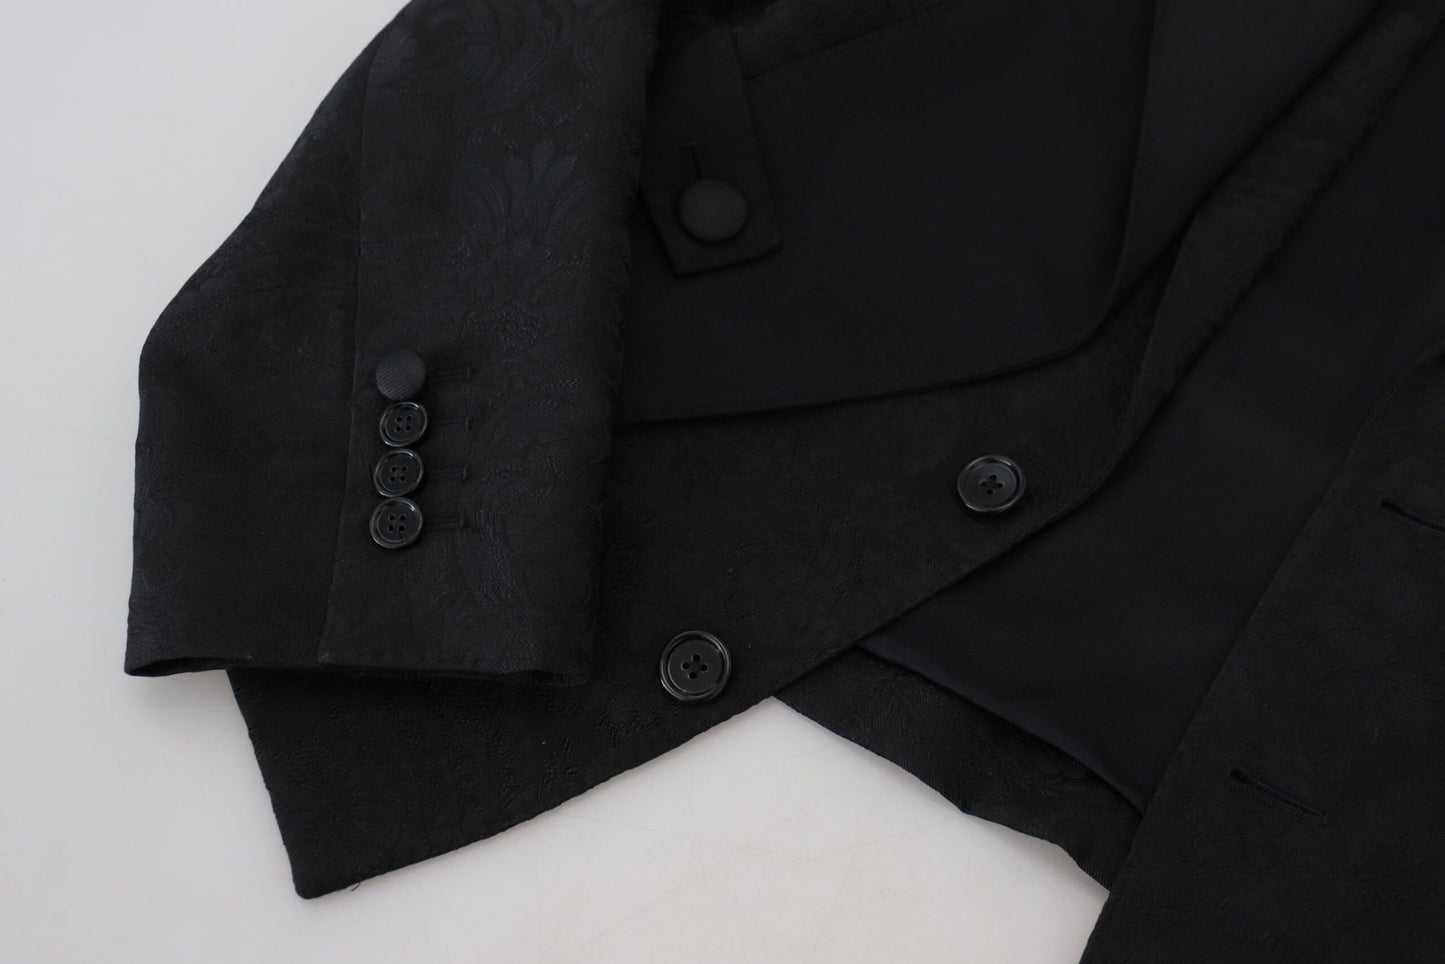 Dolce & Gabbana Elegant Black Martini Suit for the Modern Man